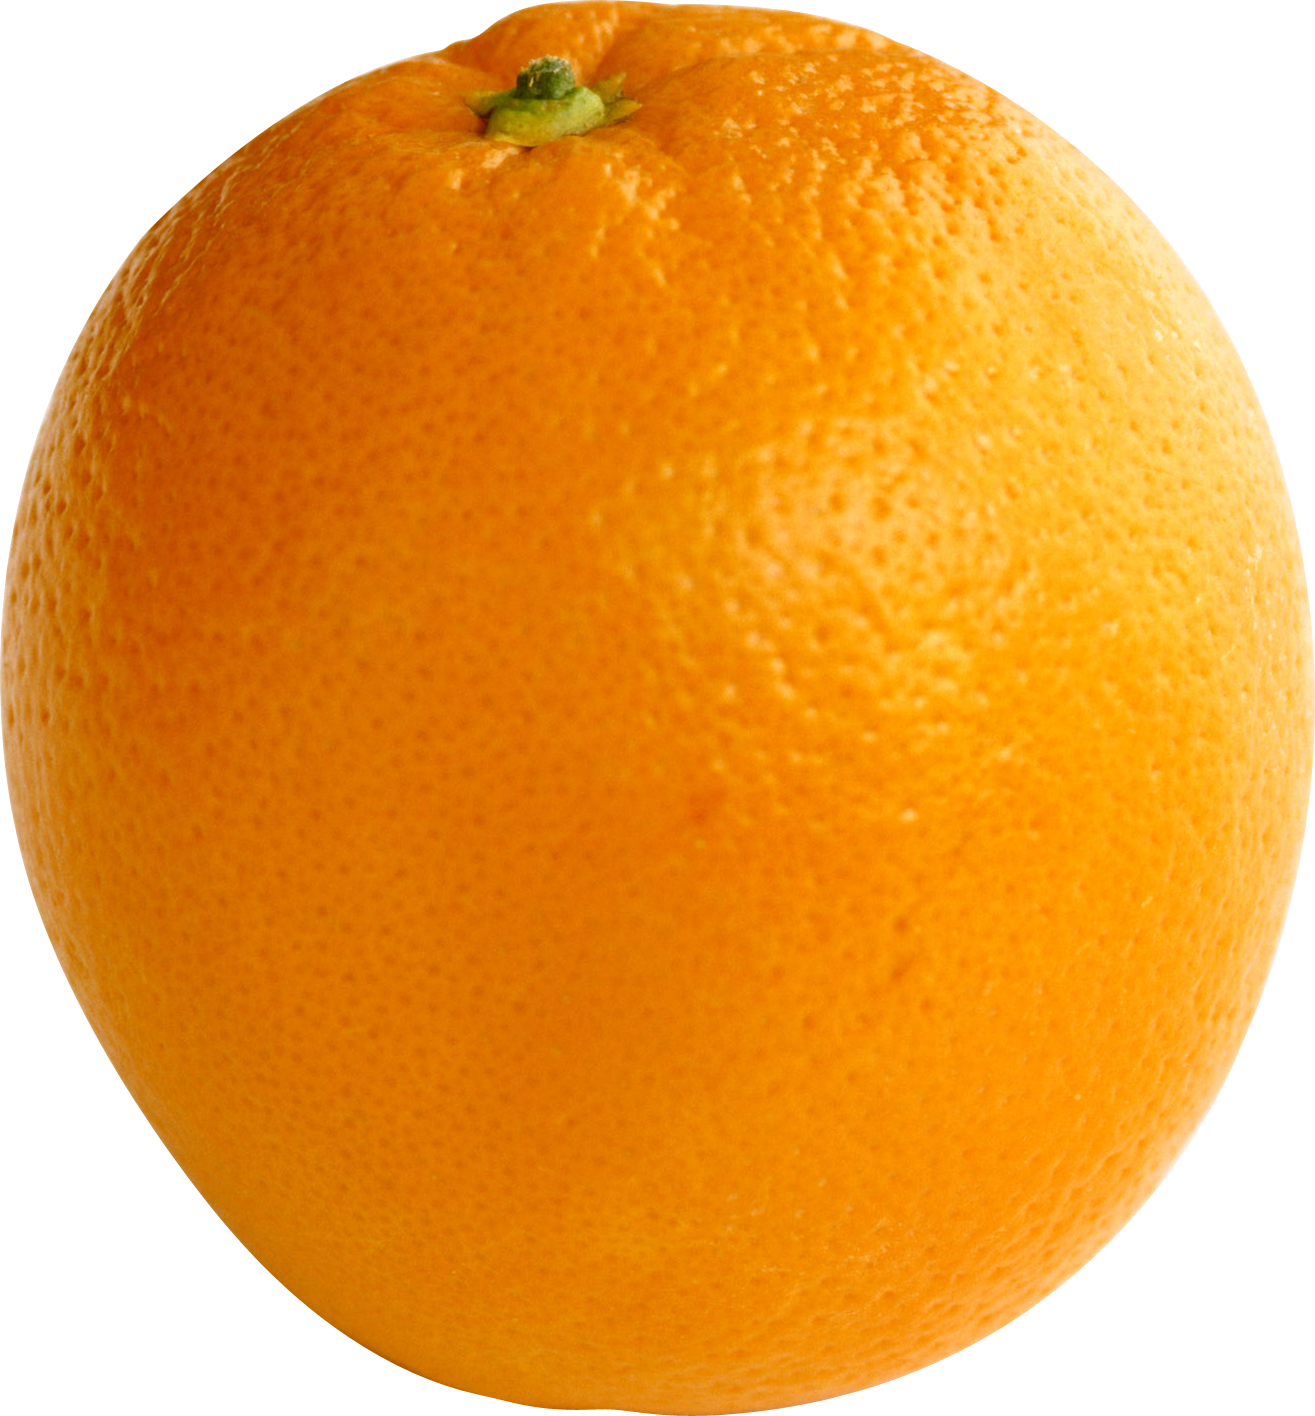 Free Picture Of Apple Juice Download Free Clip Art - Orange Fruit .png (1315x1416)